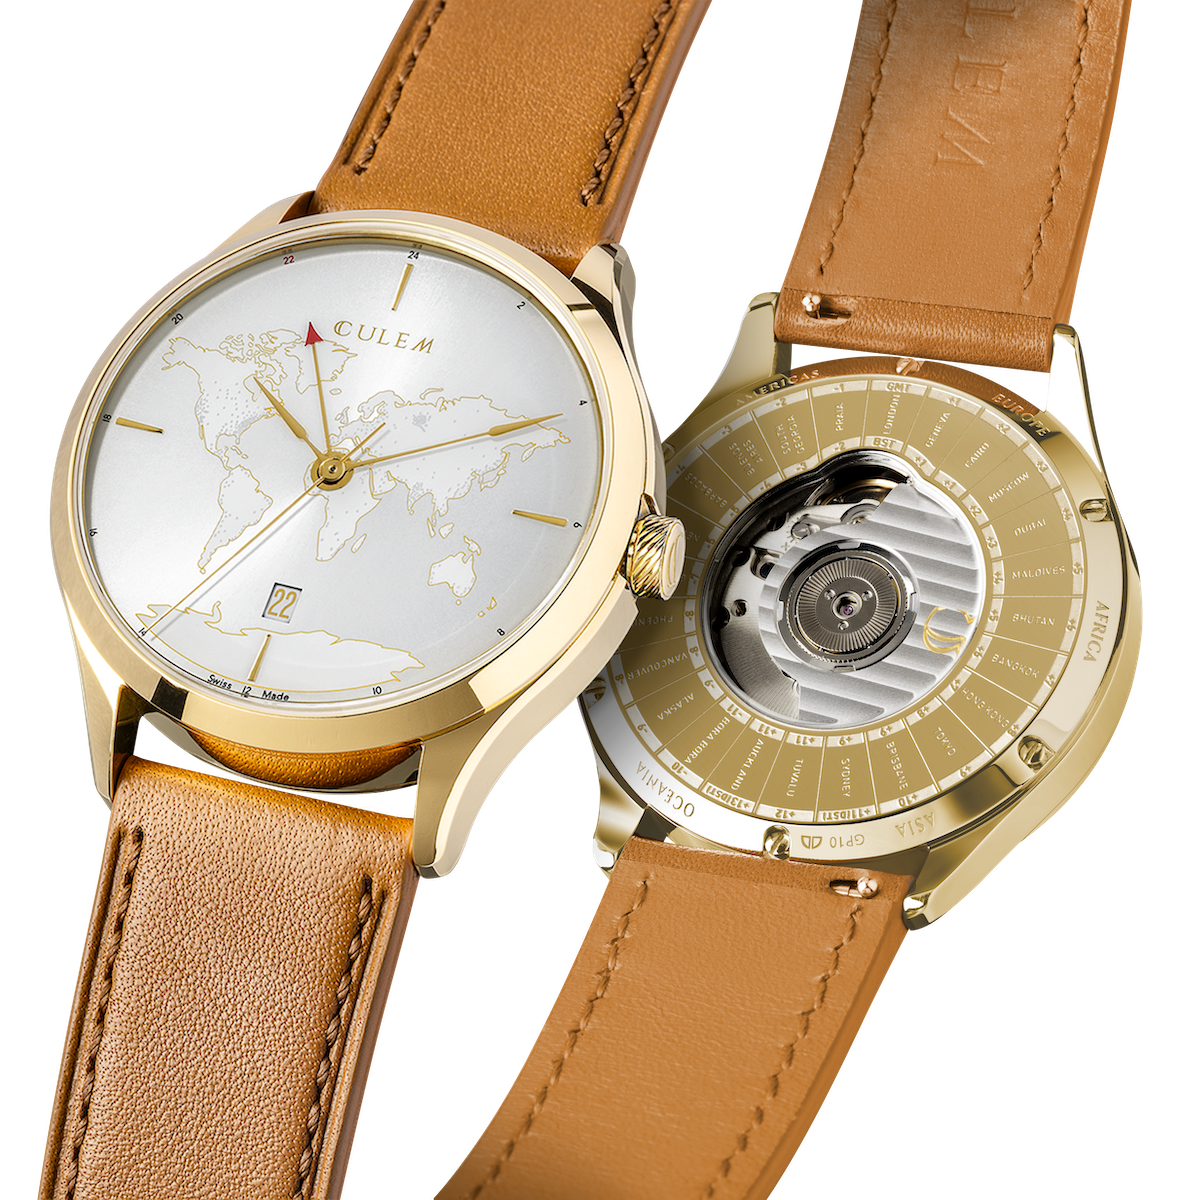 CuleM Lights GMT watch